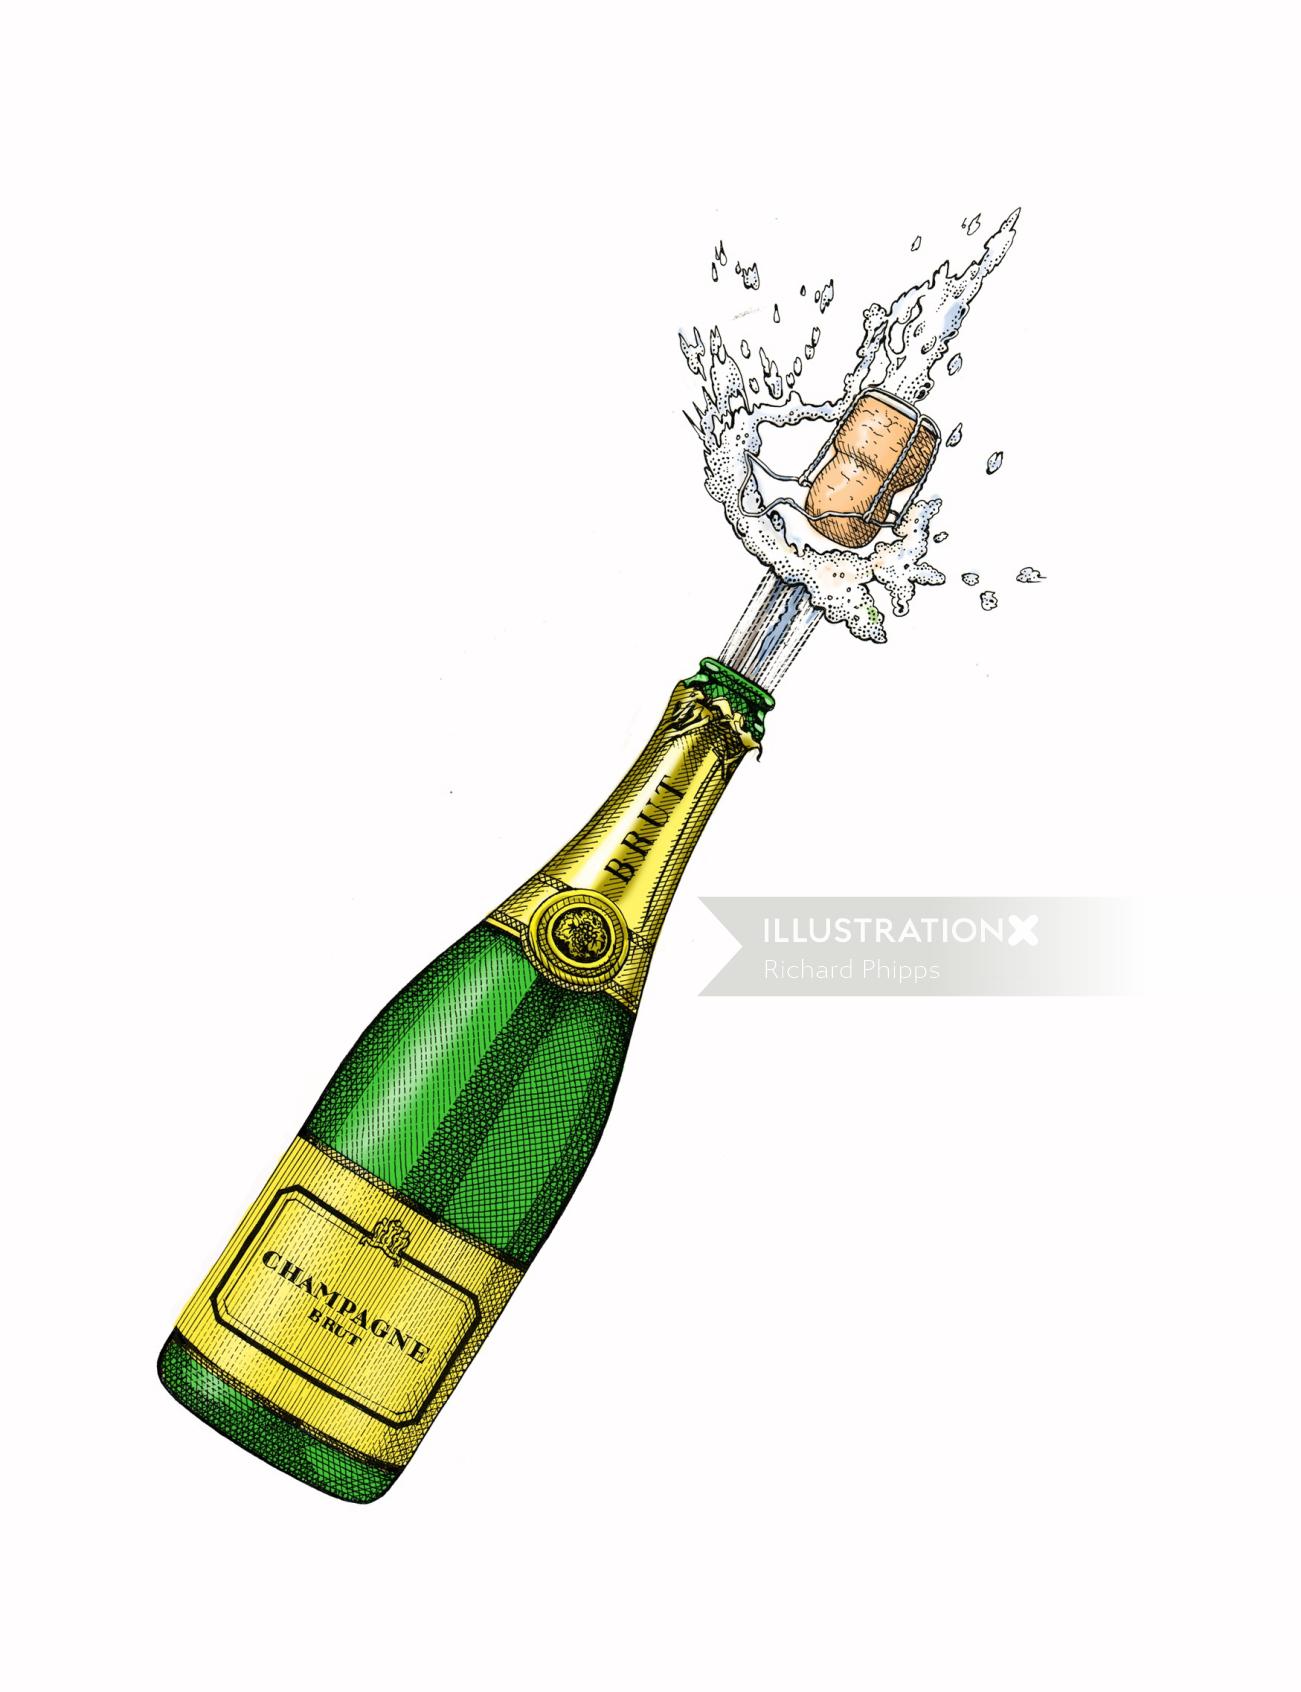 Brut Champagne | Illustration by Richard Phipps